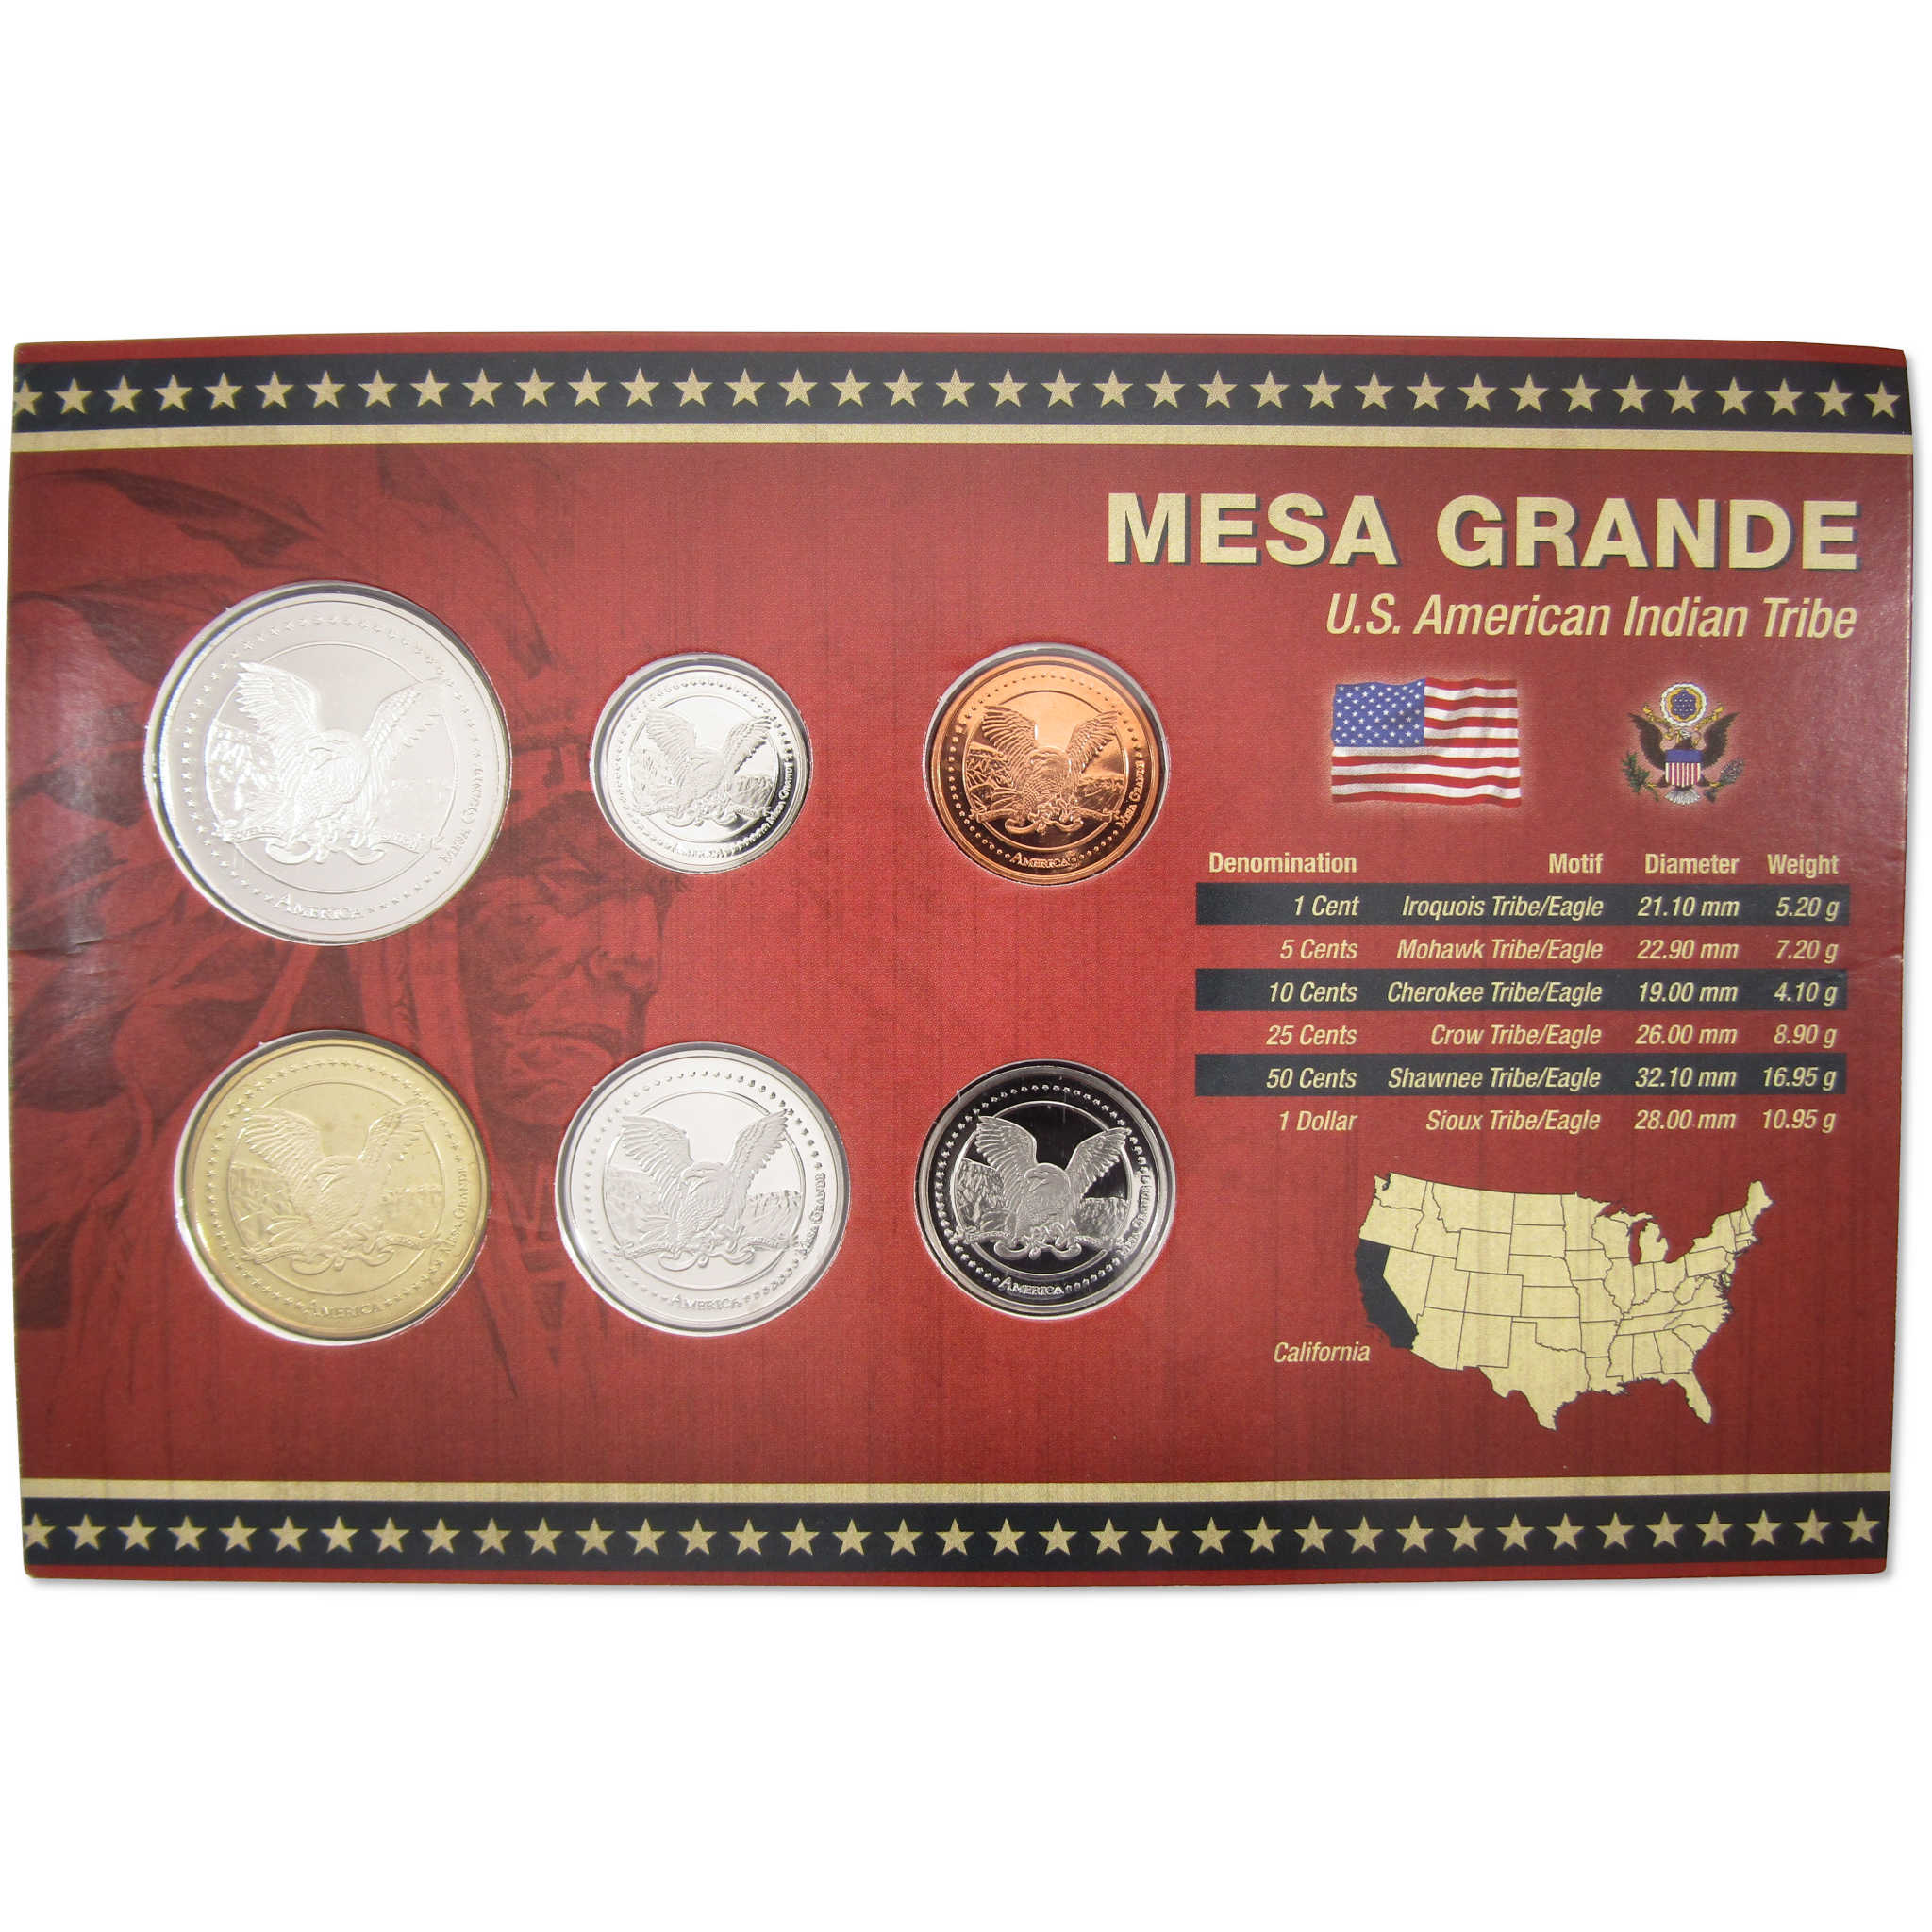 2013 Mesa Grande Tribe Native American Uncirculated Coin Set Collectible